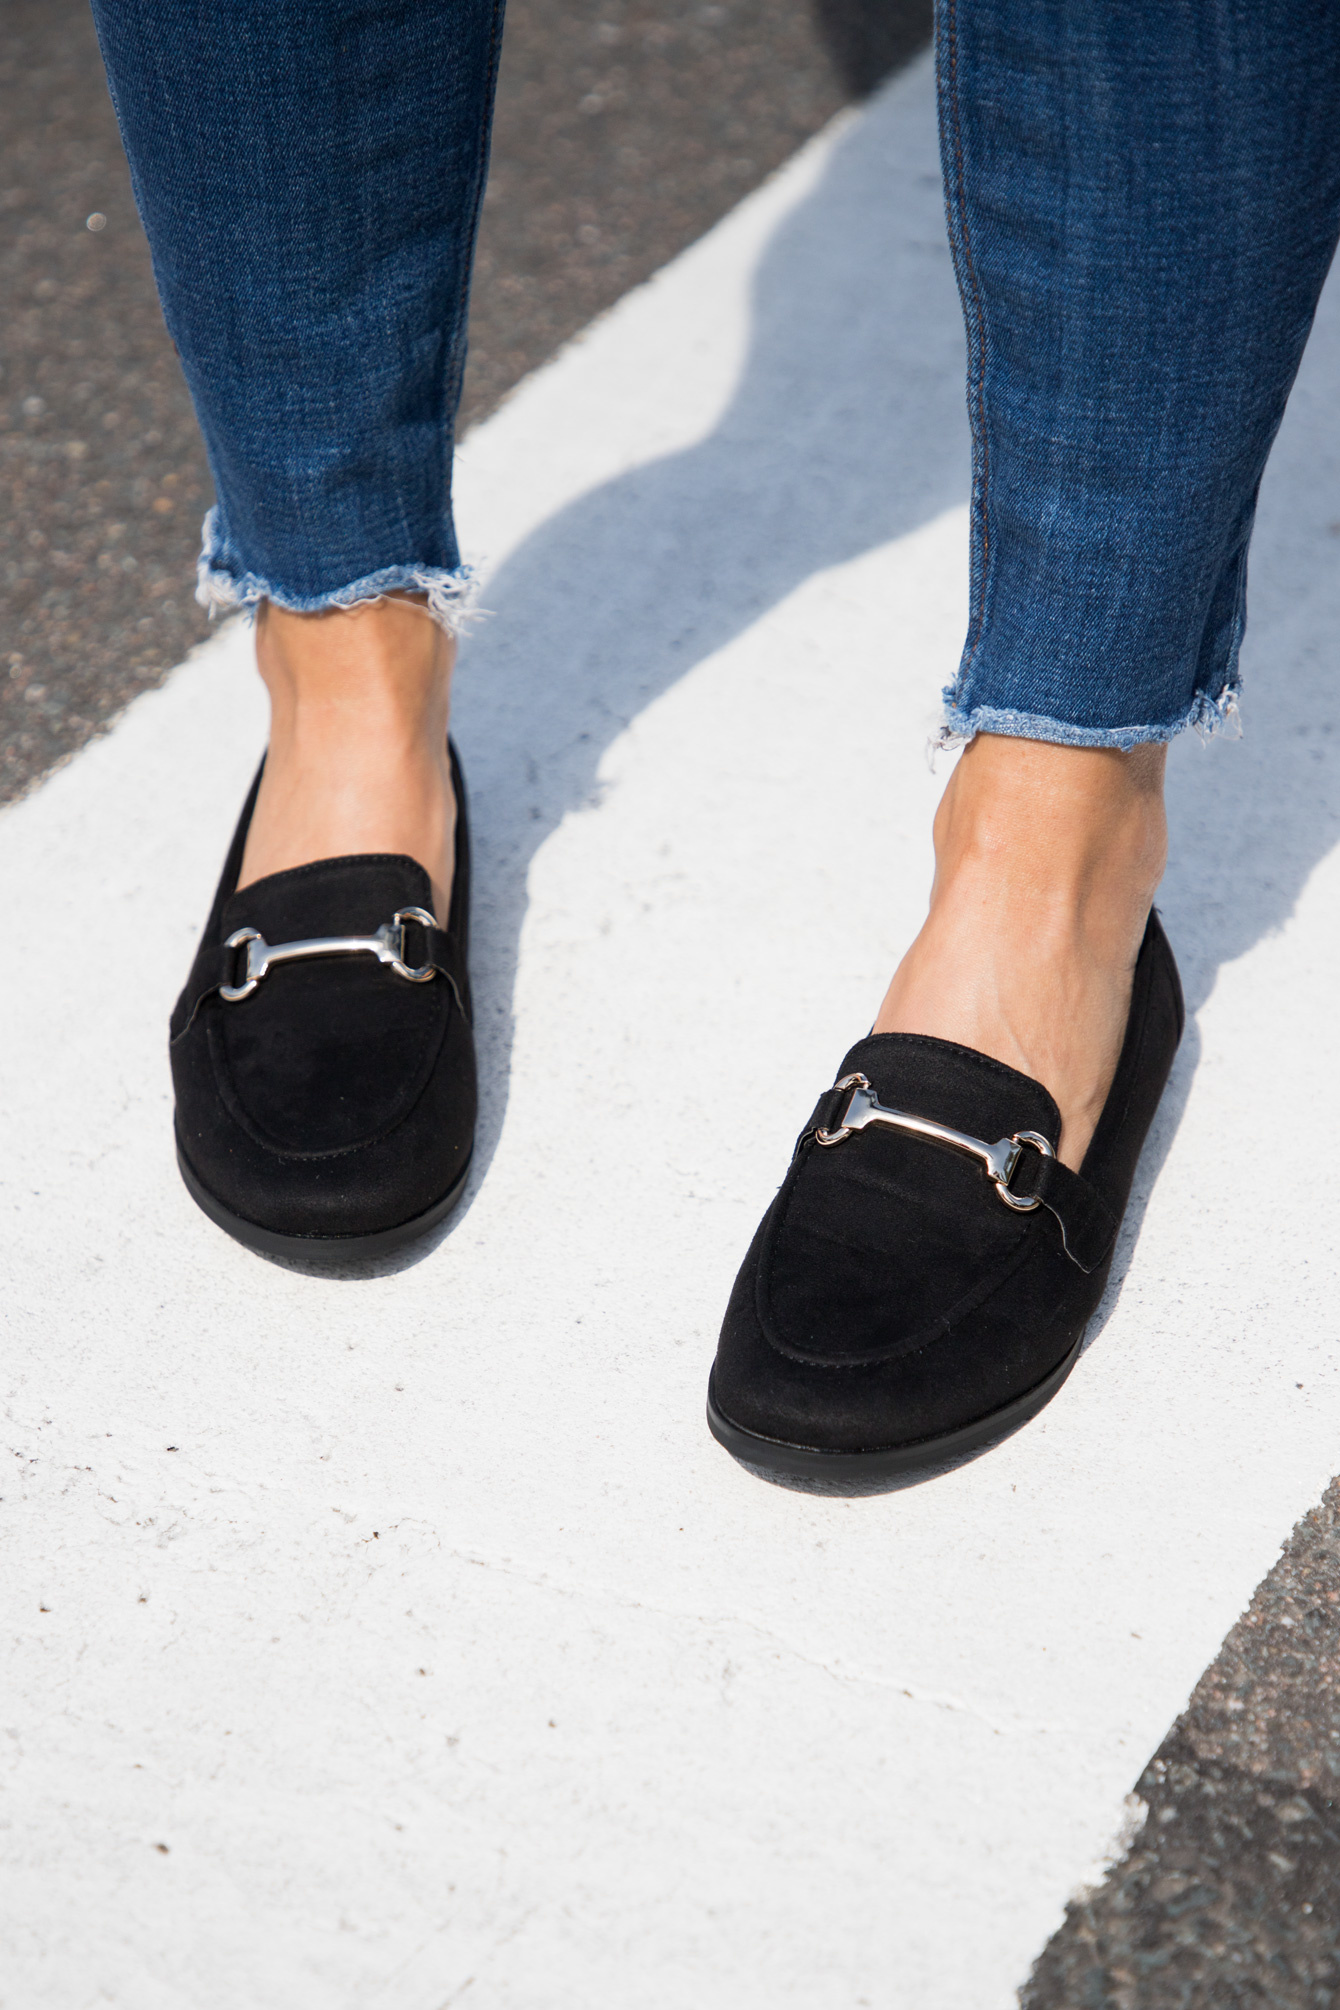 indruk Bondgenoot Opblazen Black loafer I Instappers met gouden detail - Famous Store